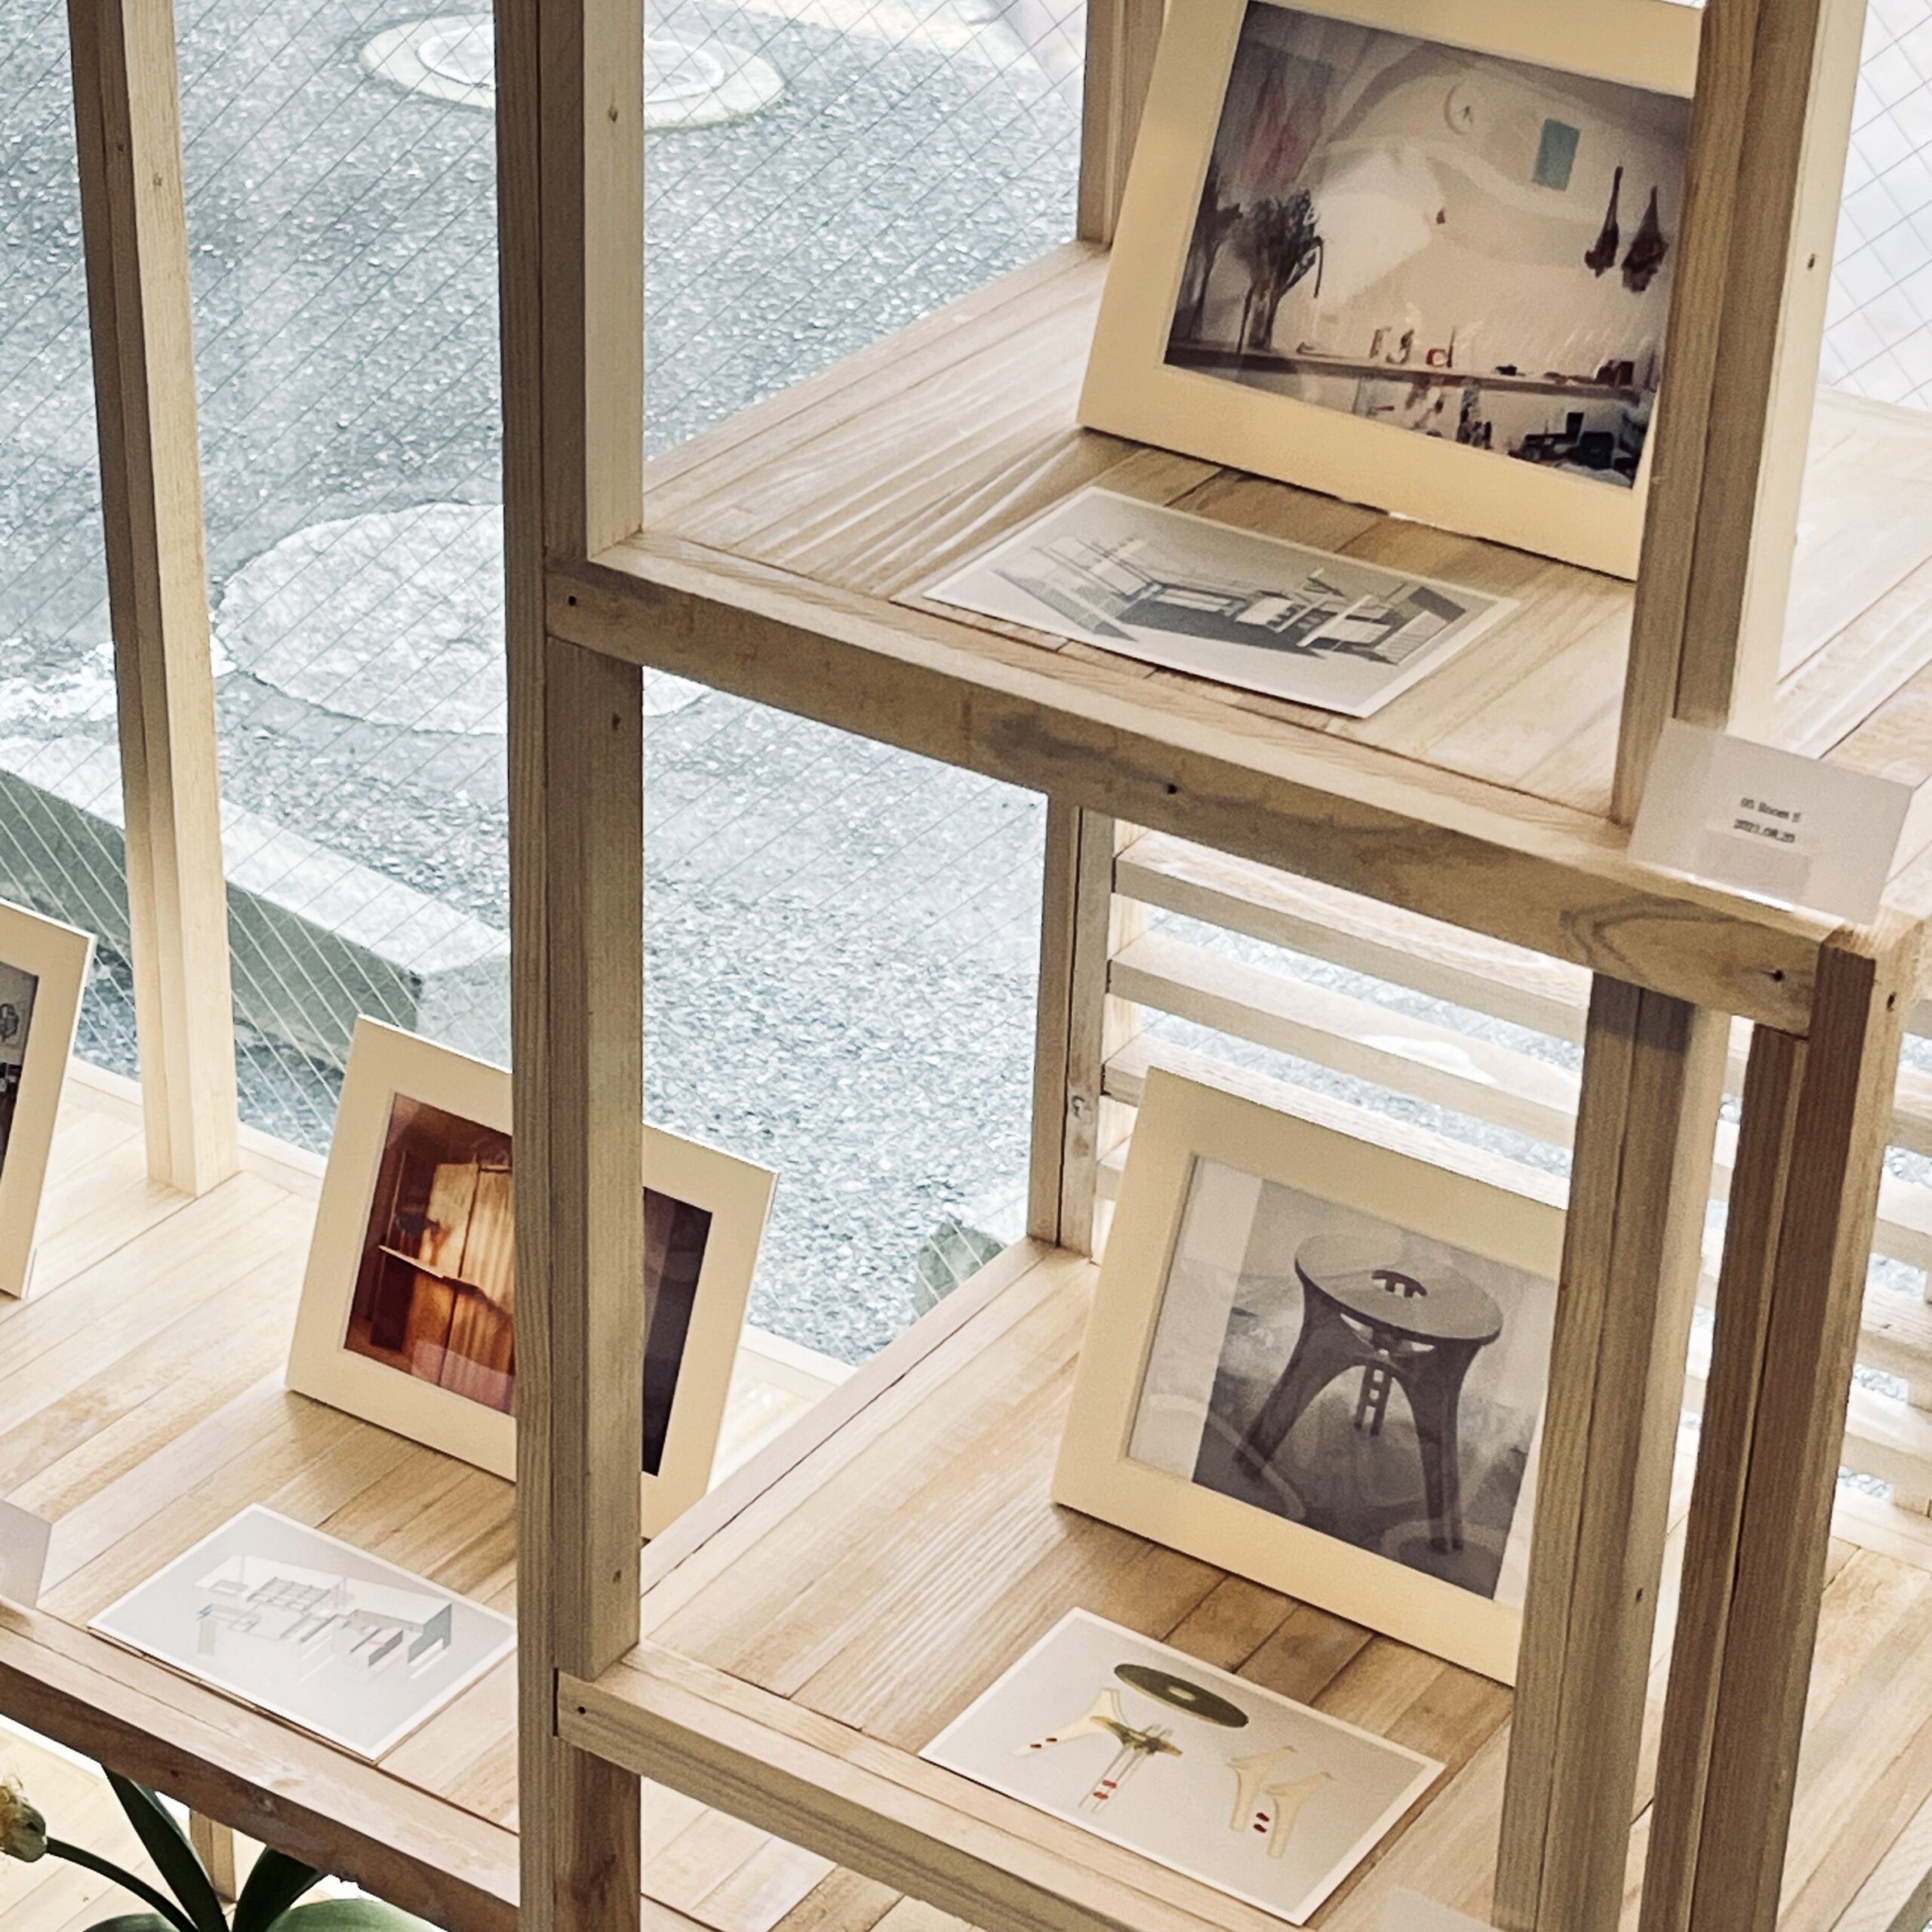 Kaedenoki architectural studio : Furniture to Architecture 2020-2023